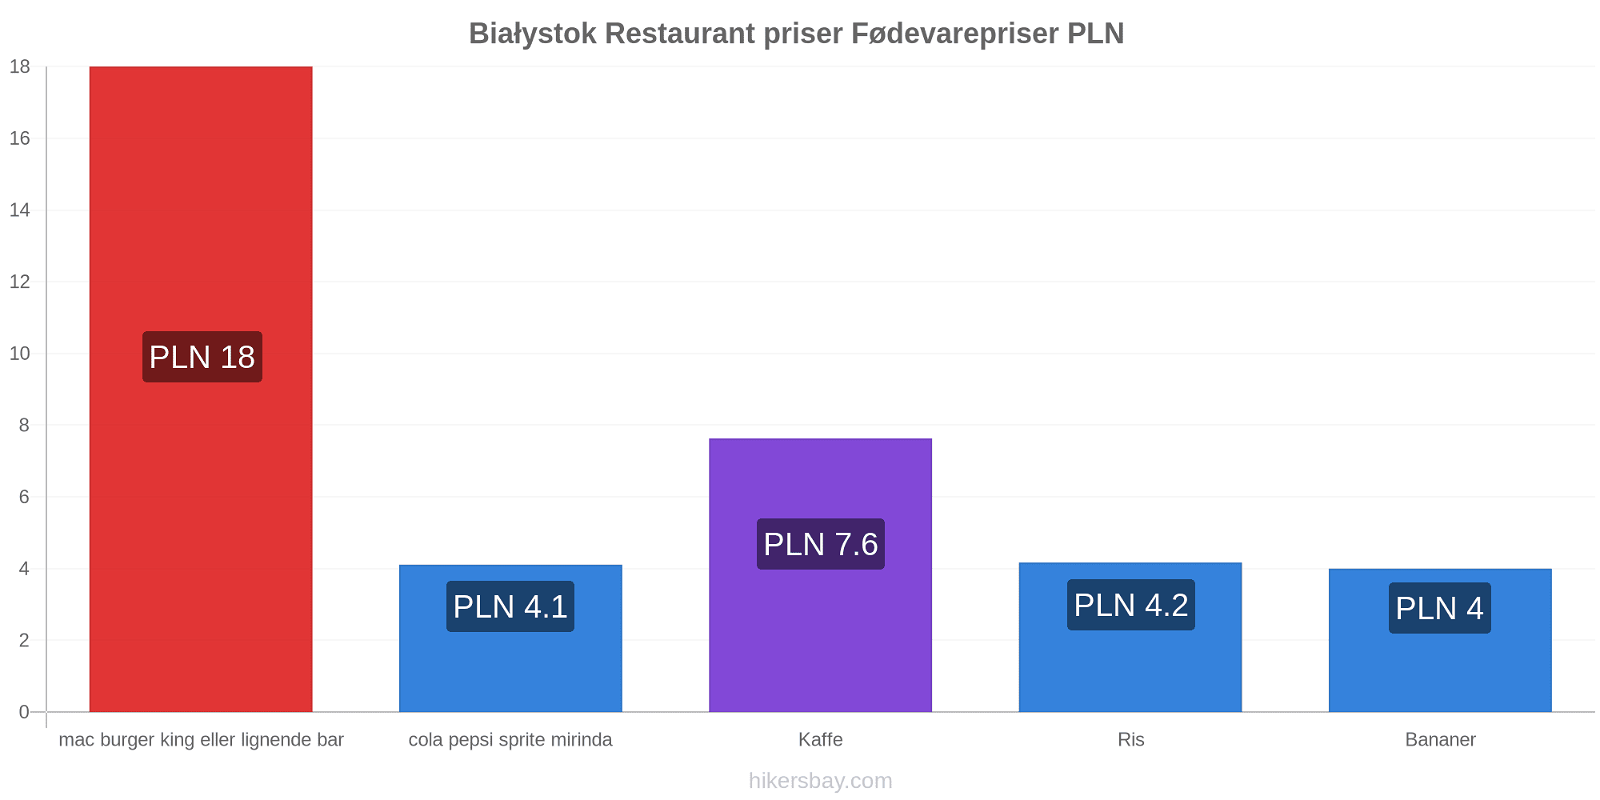 Białystok prisændringer hikersbay.com